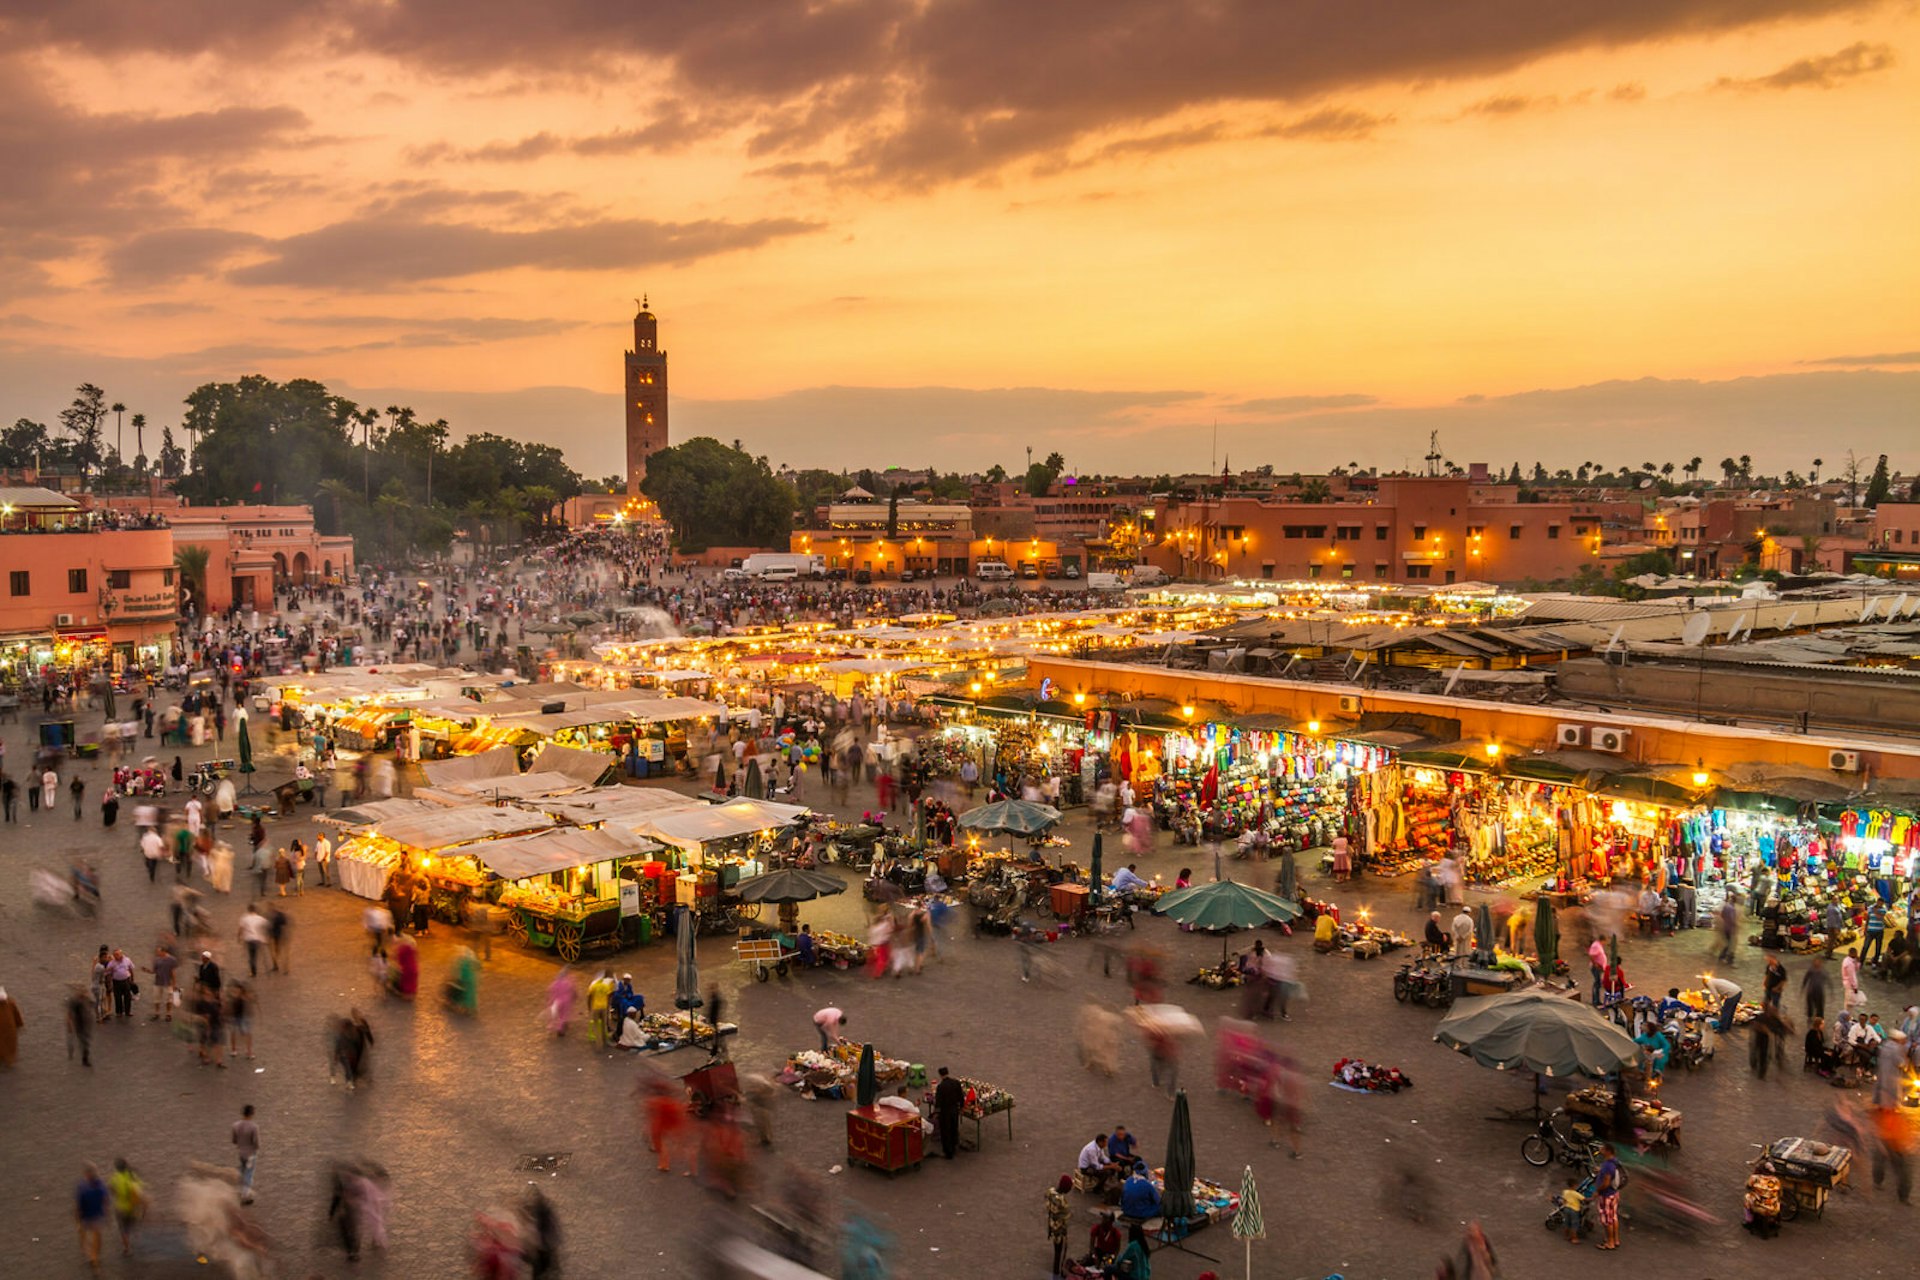 Marrakesh's Djemaa El Fna filled with people at sunset © Matej Kastelic / Shutterstock